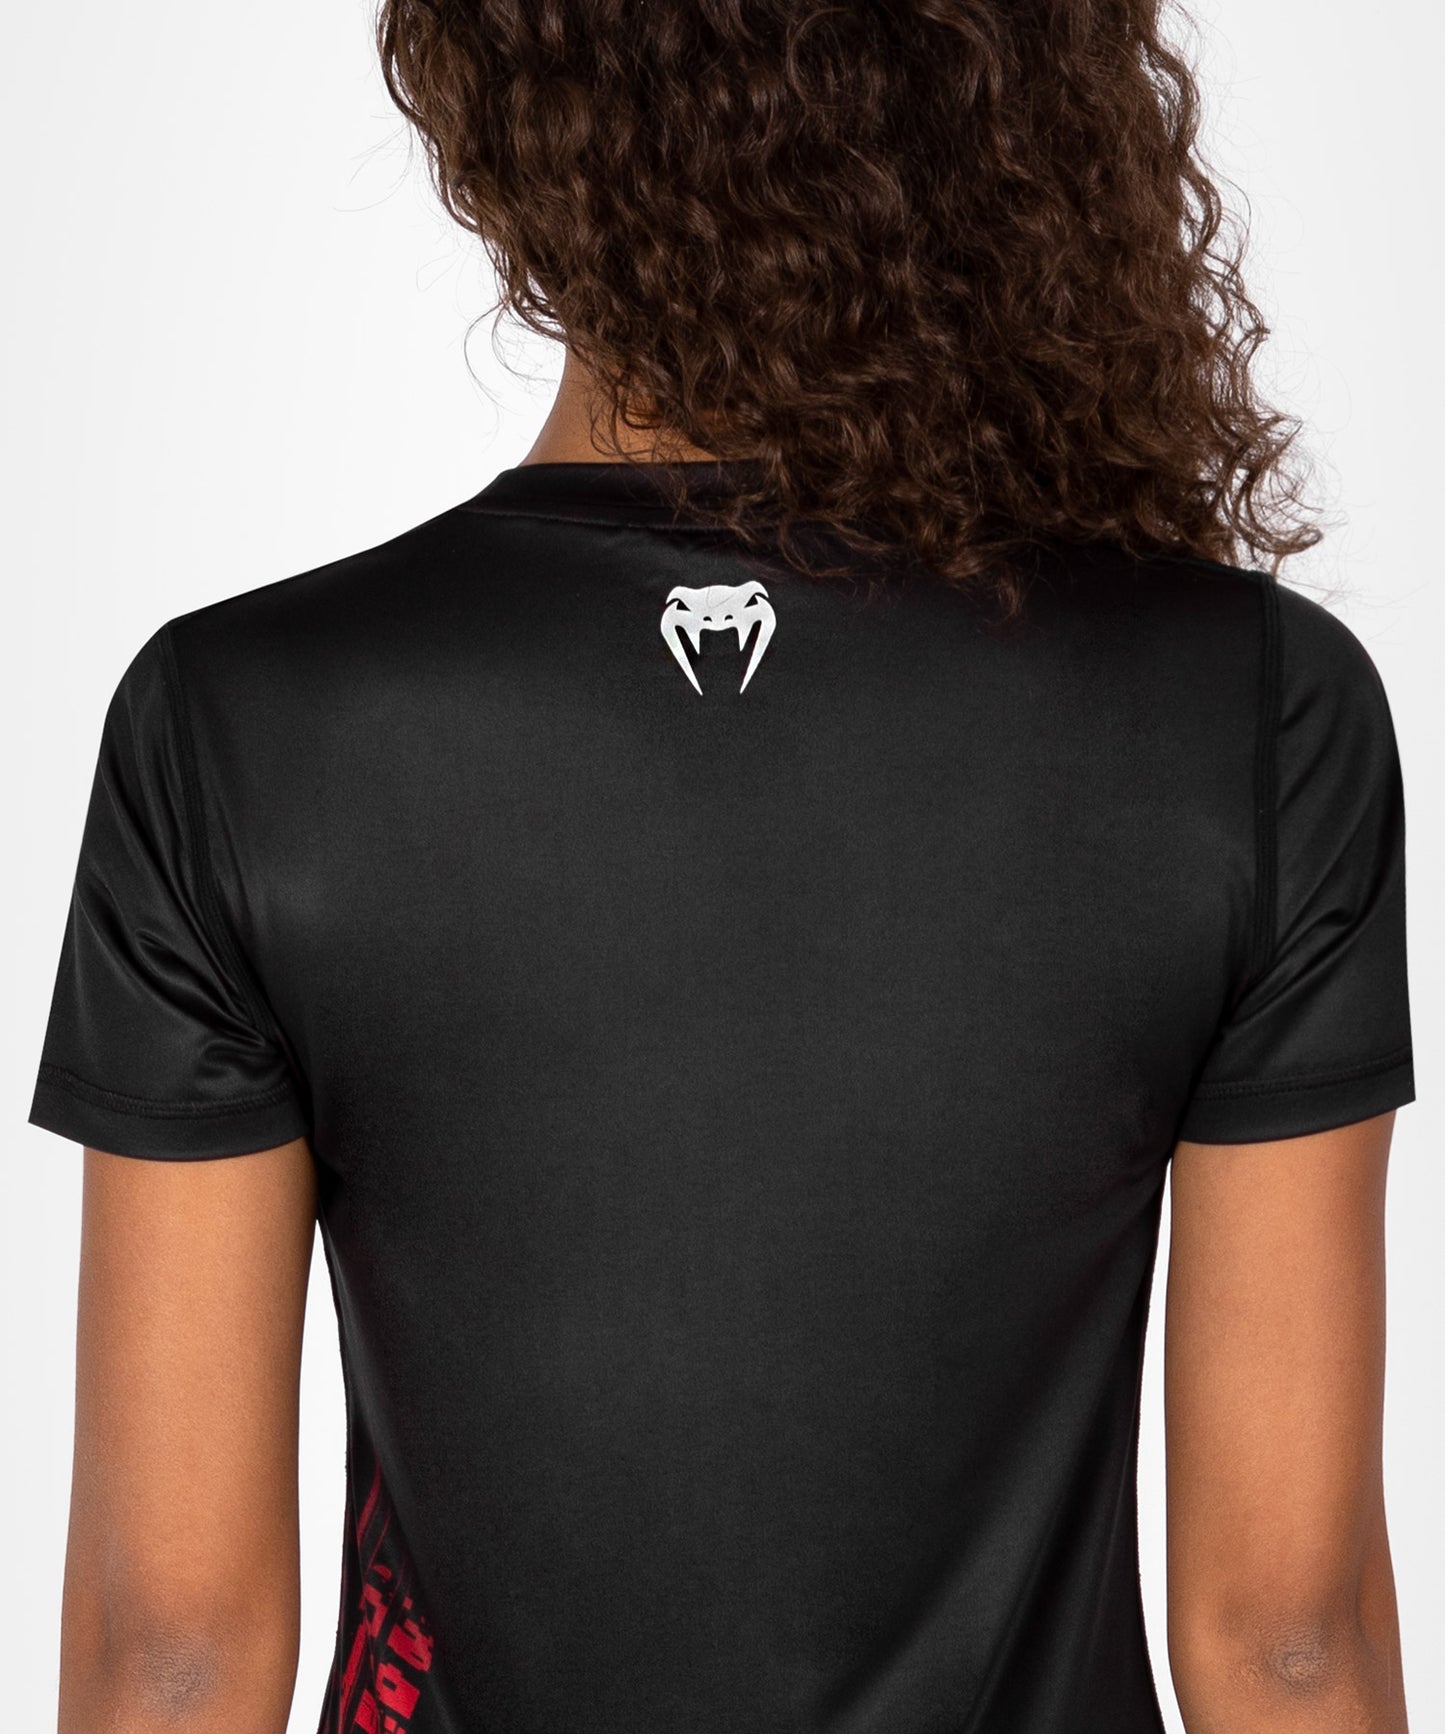 UFC Venum Performance Institute 2.0 Women’s Dry-Tech Shirt - Black/Red